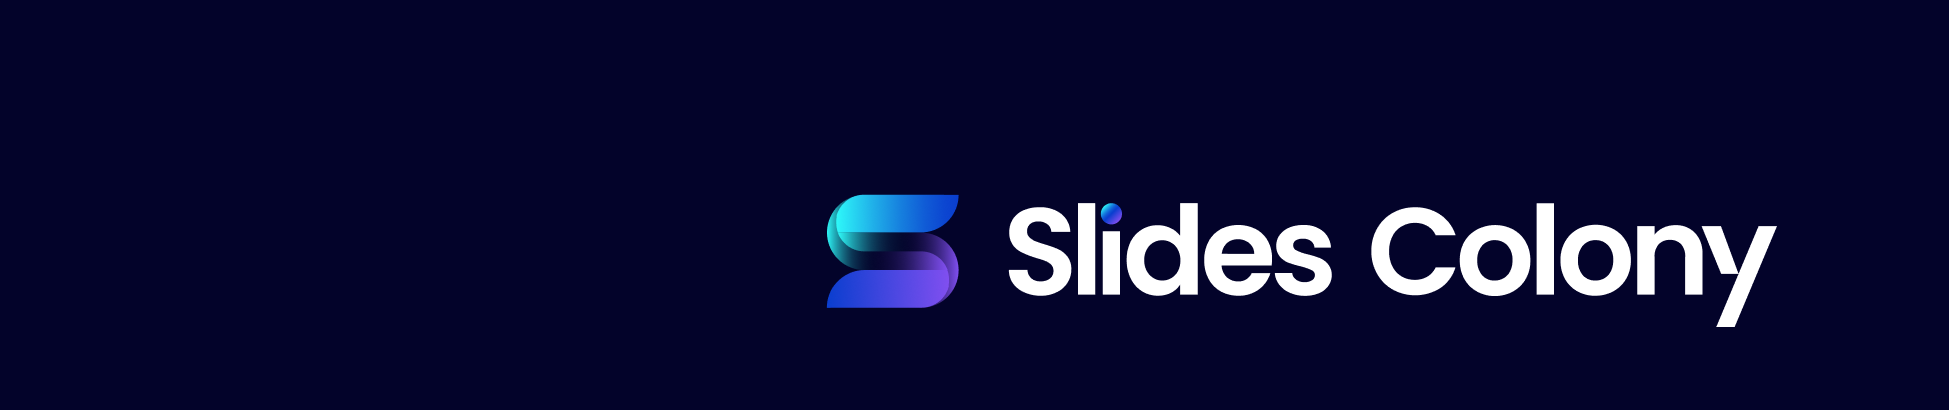 Slides Colony's profile banner